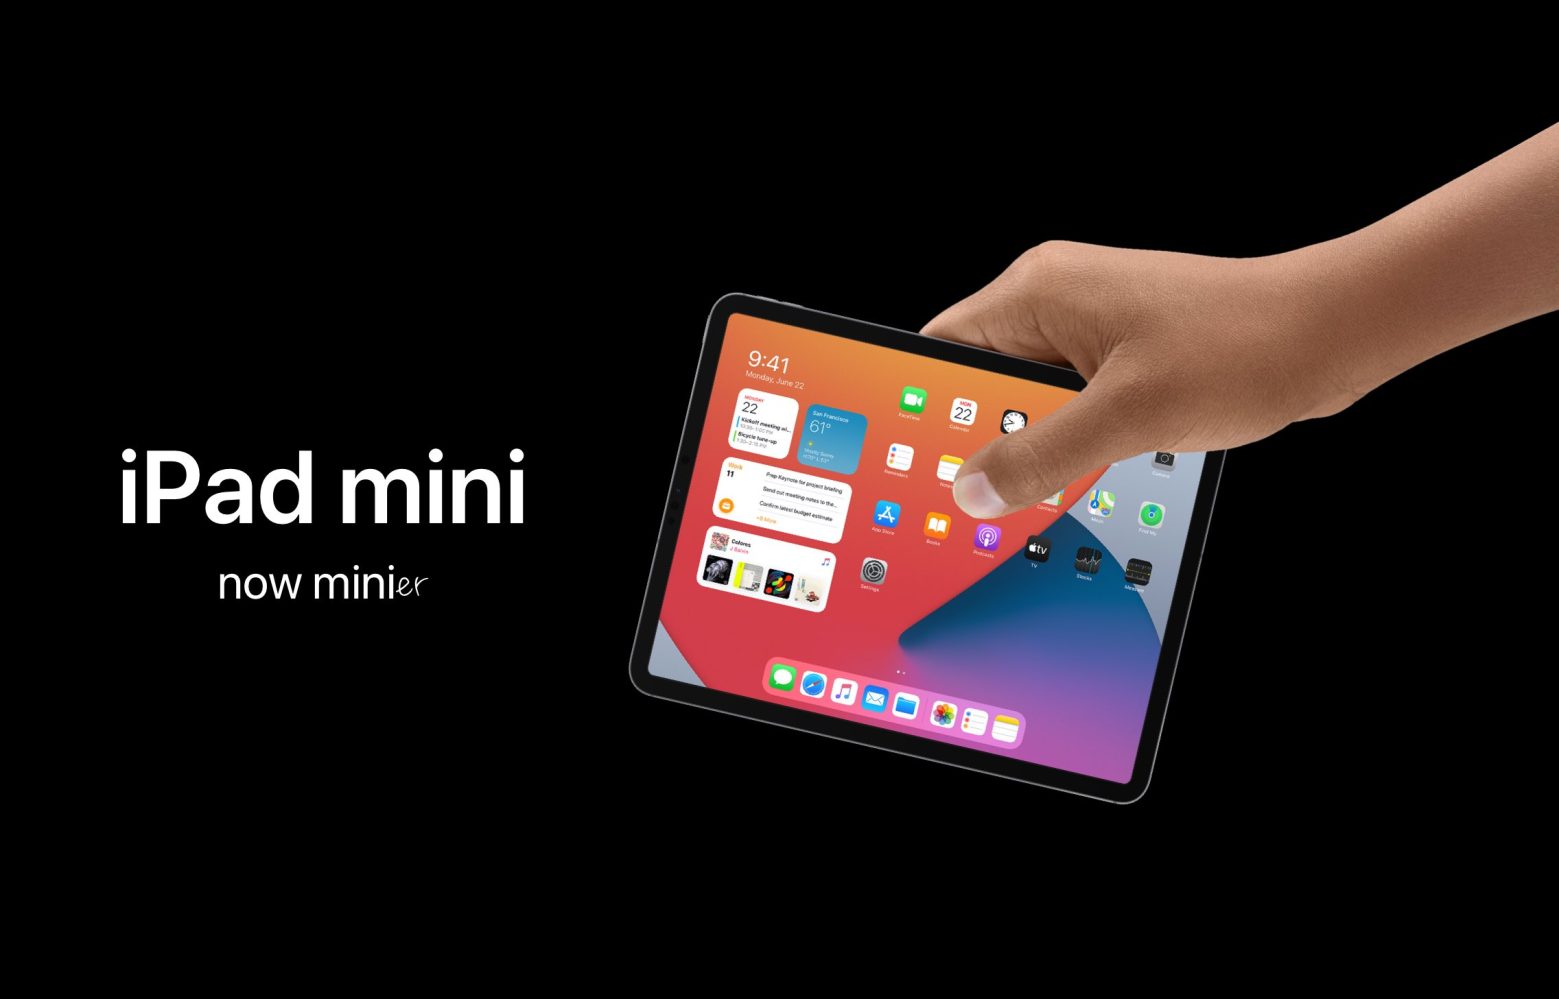 Concept imagines overhauled iPad mini with iPad Pro-like design and